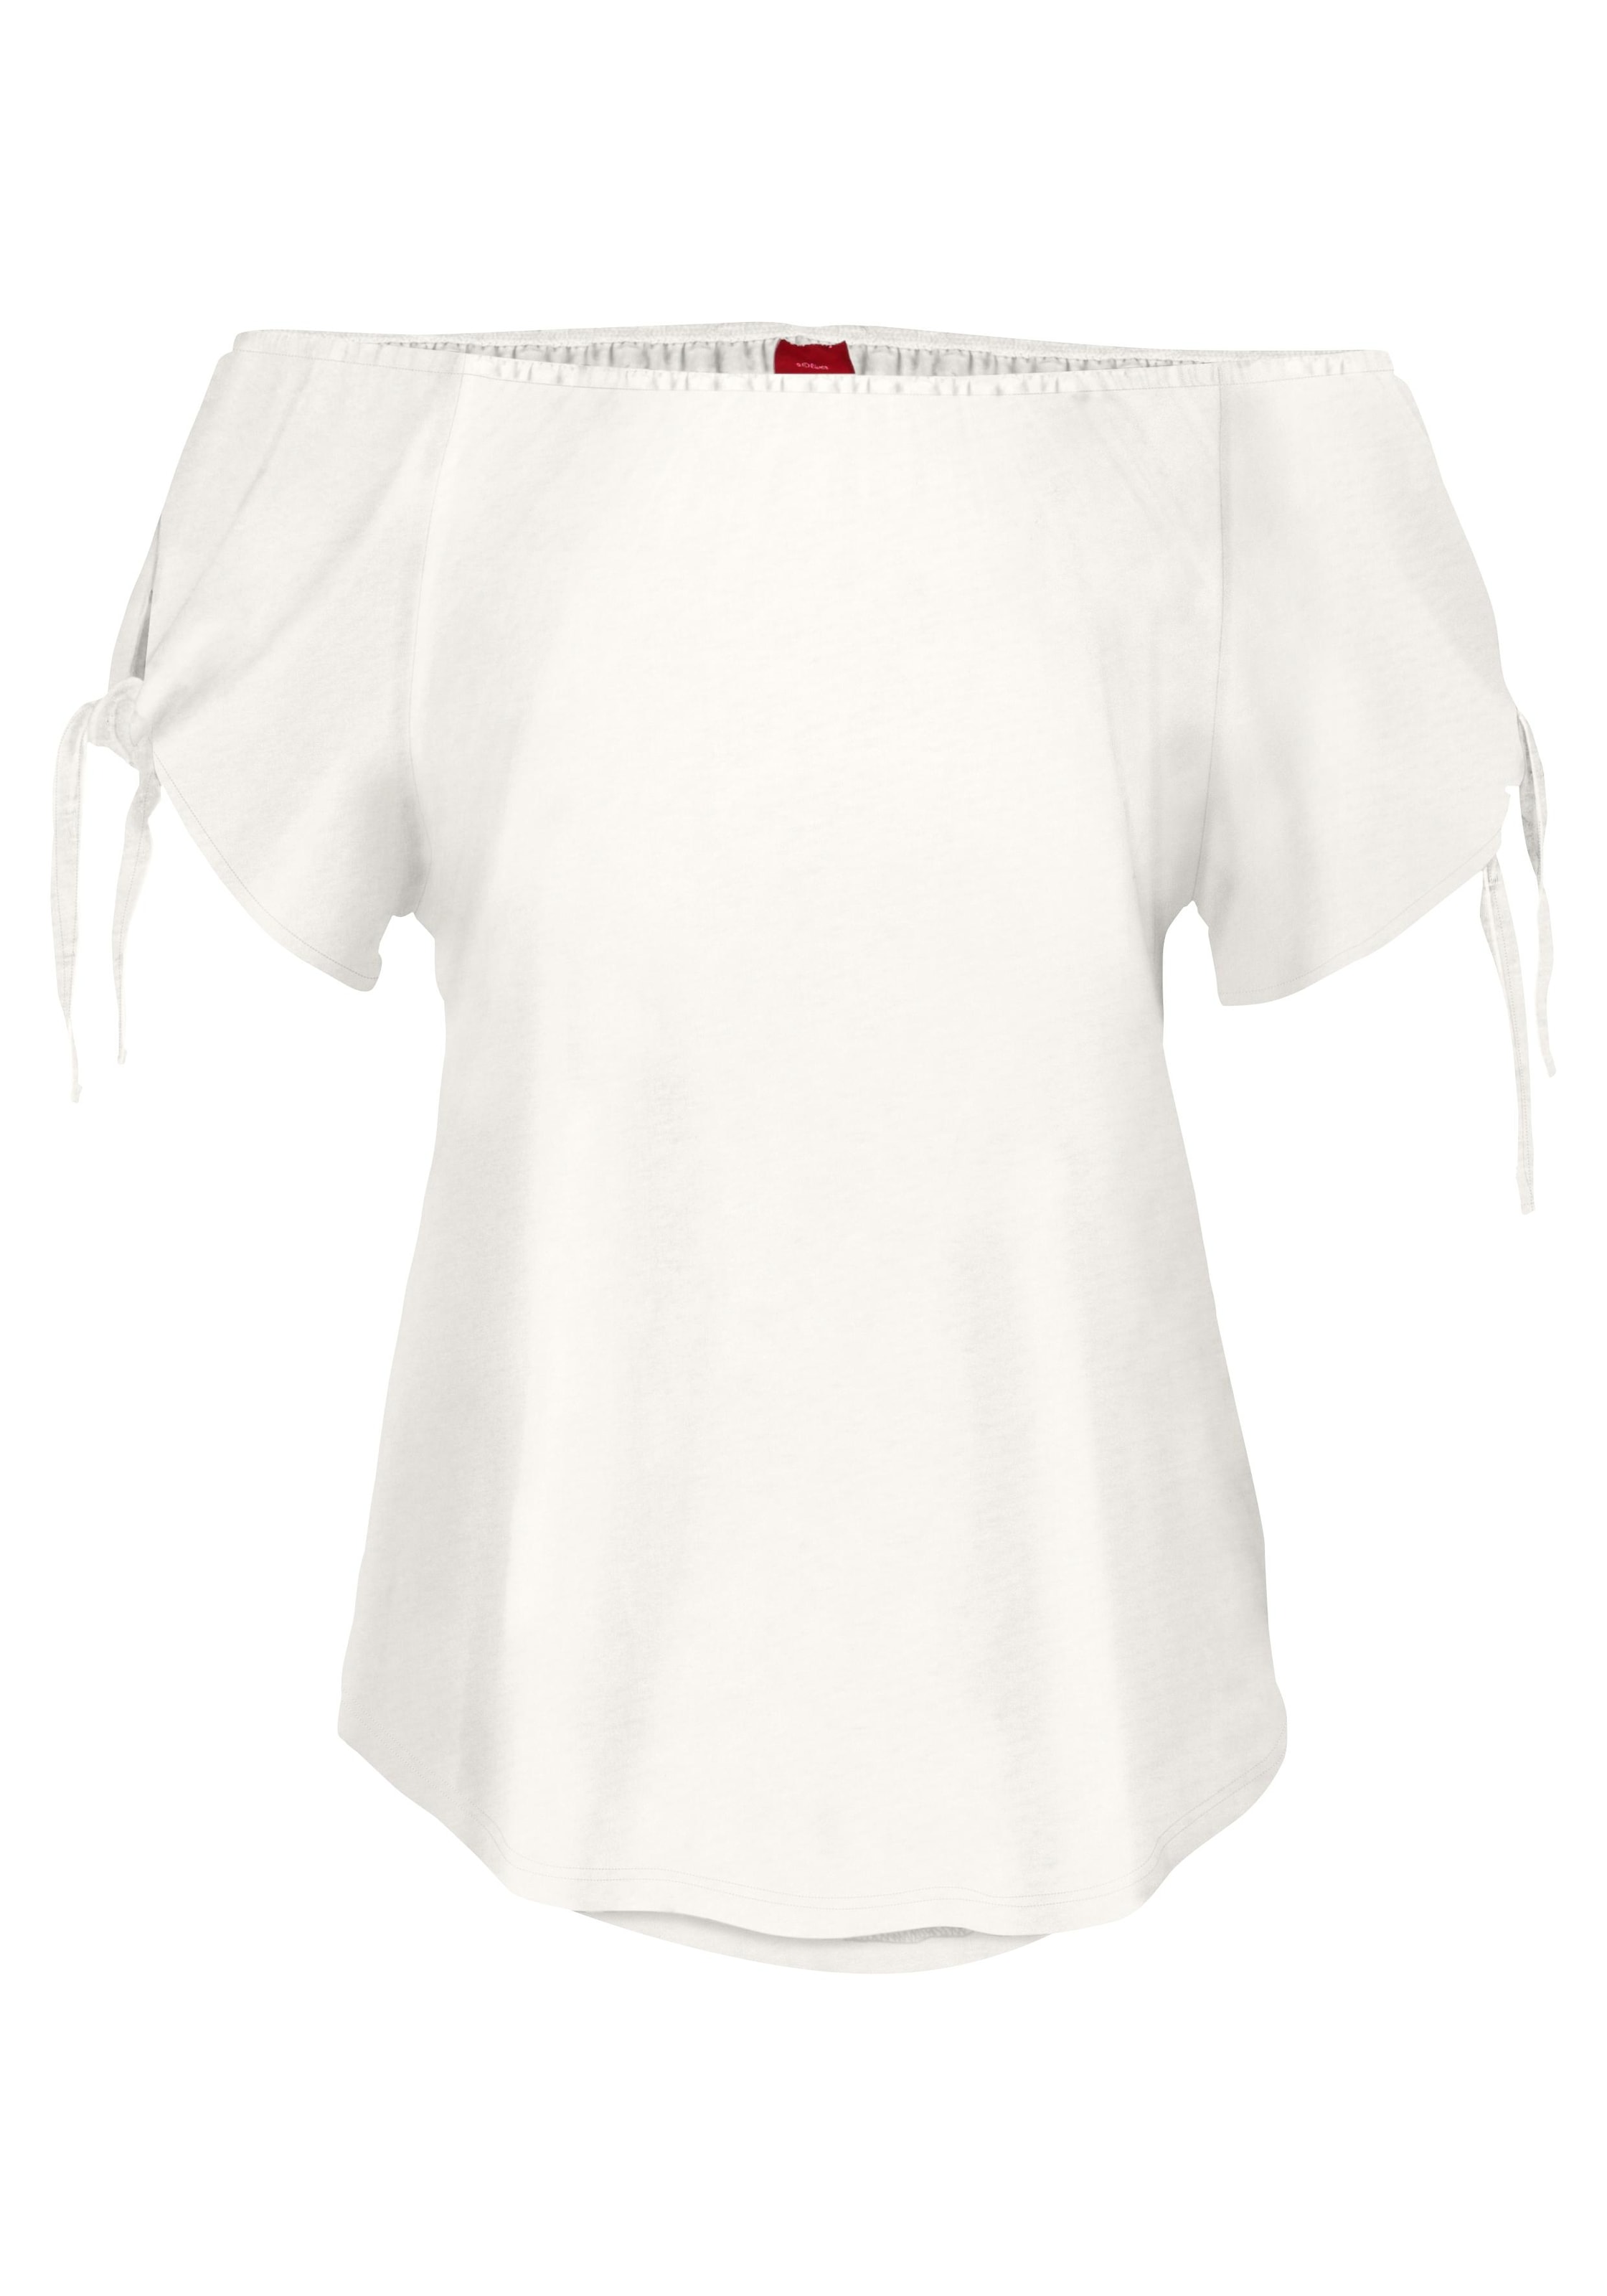 s.Oliver T-Shirt, mit Schlitzen an den Ärmeln, variierbar als Carmenshirt,  schulterfrei bestellen